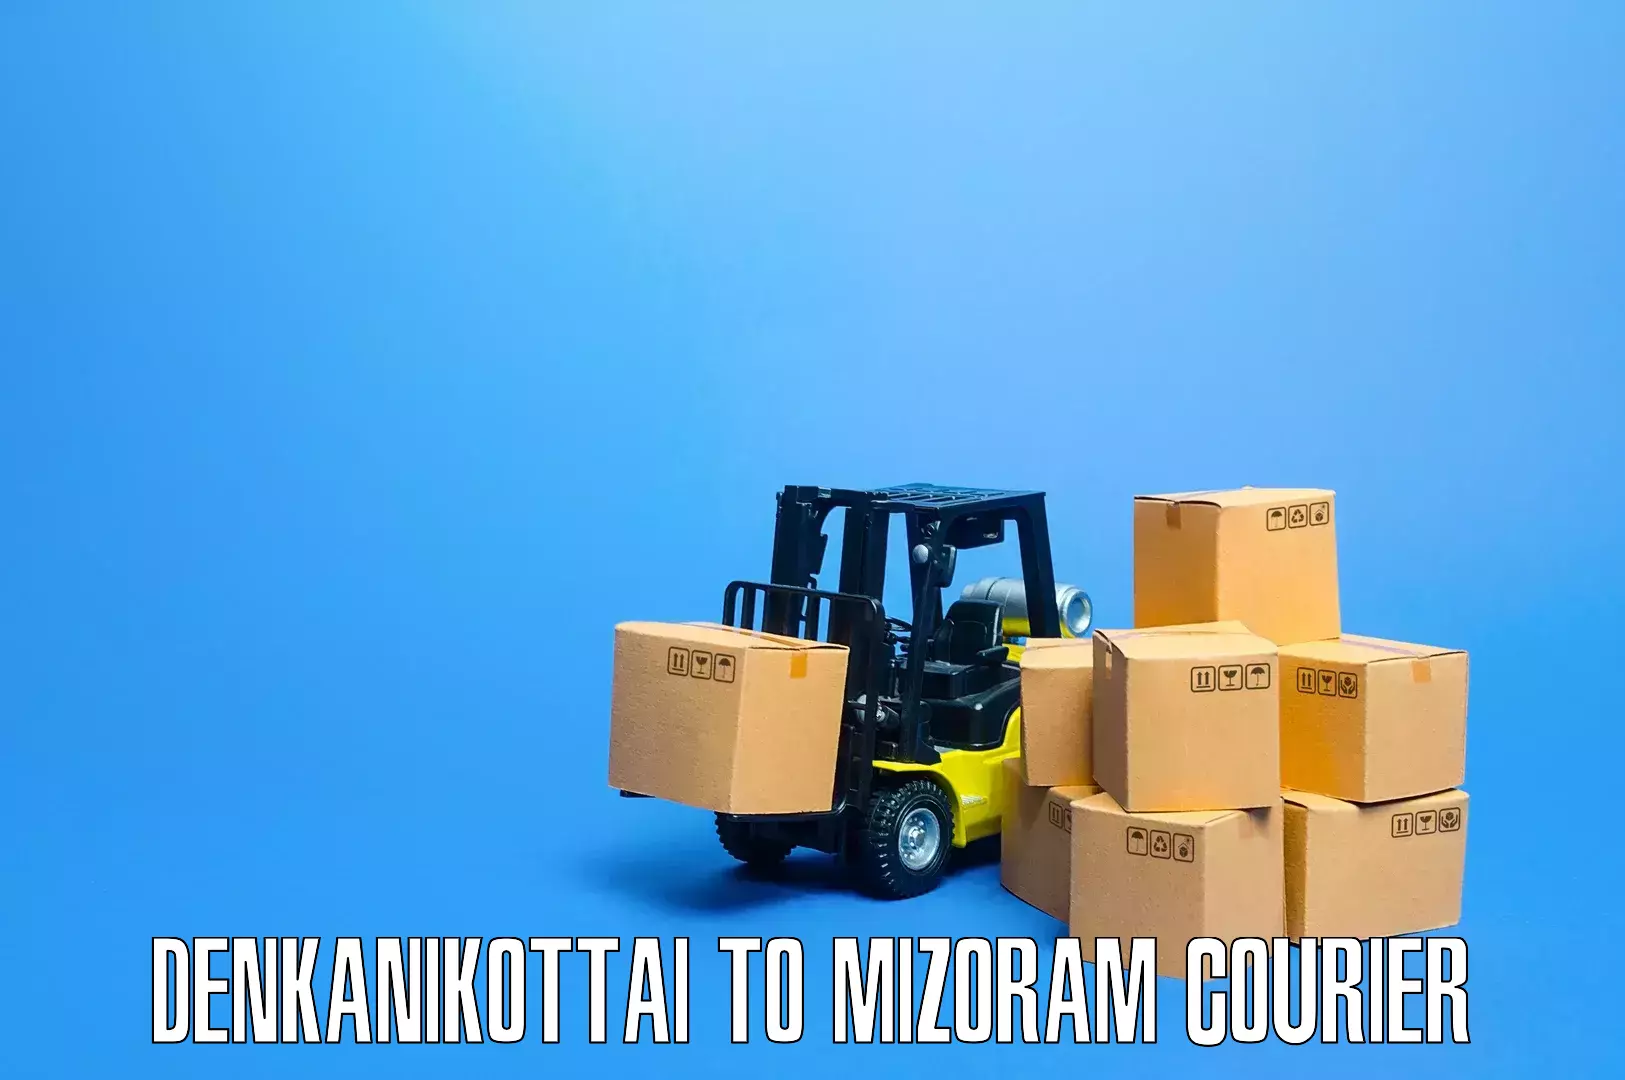 Nationwide furniture movers Denkanikottai to Aizawl